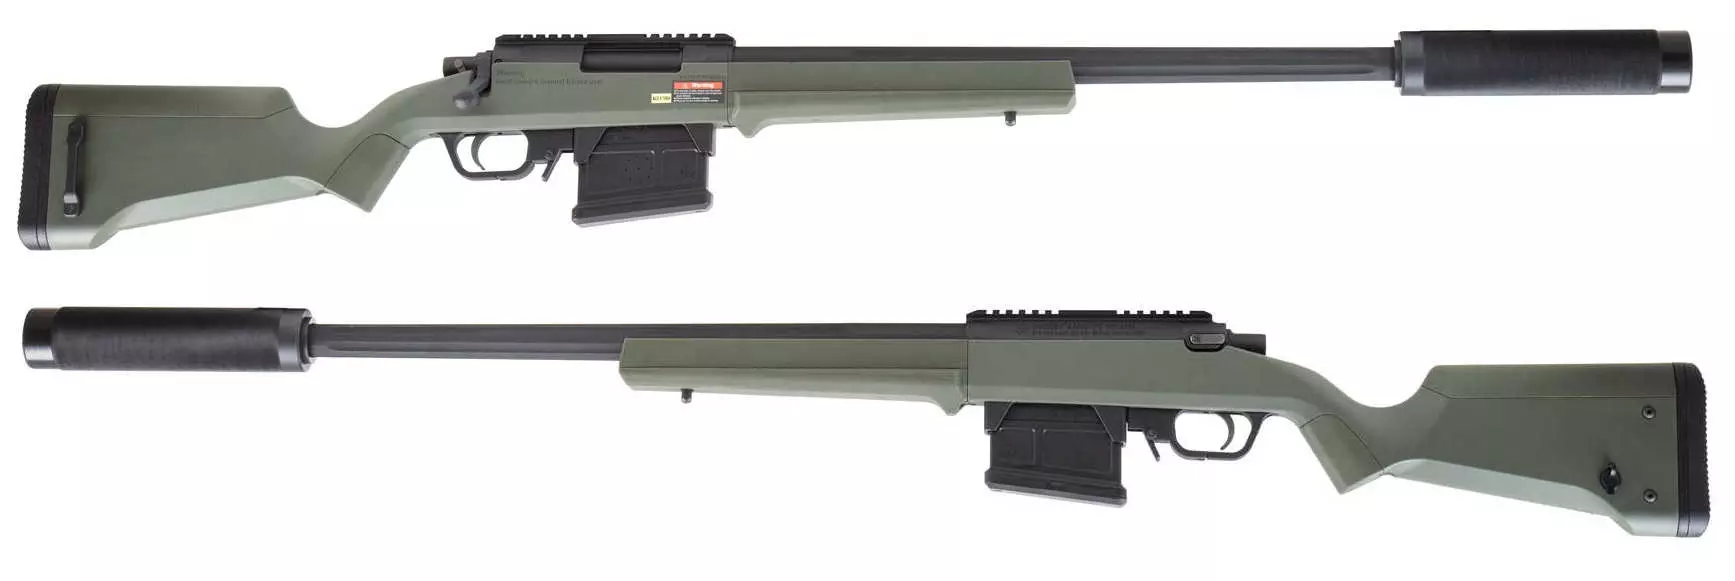 Remington 700 laser tag sniper rifle both sides